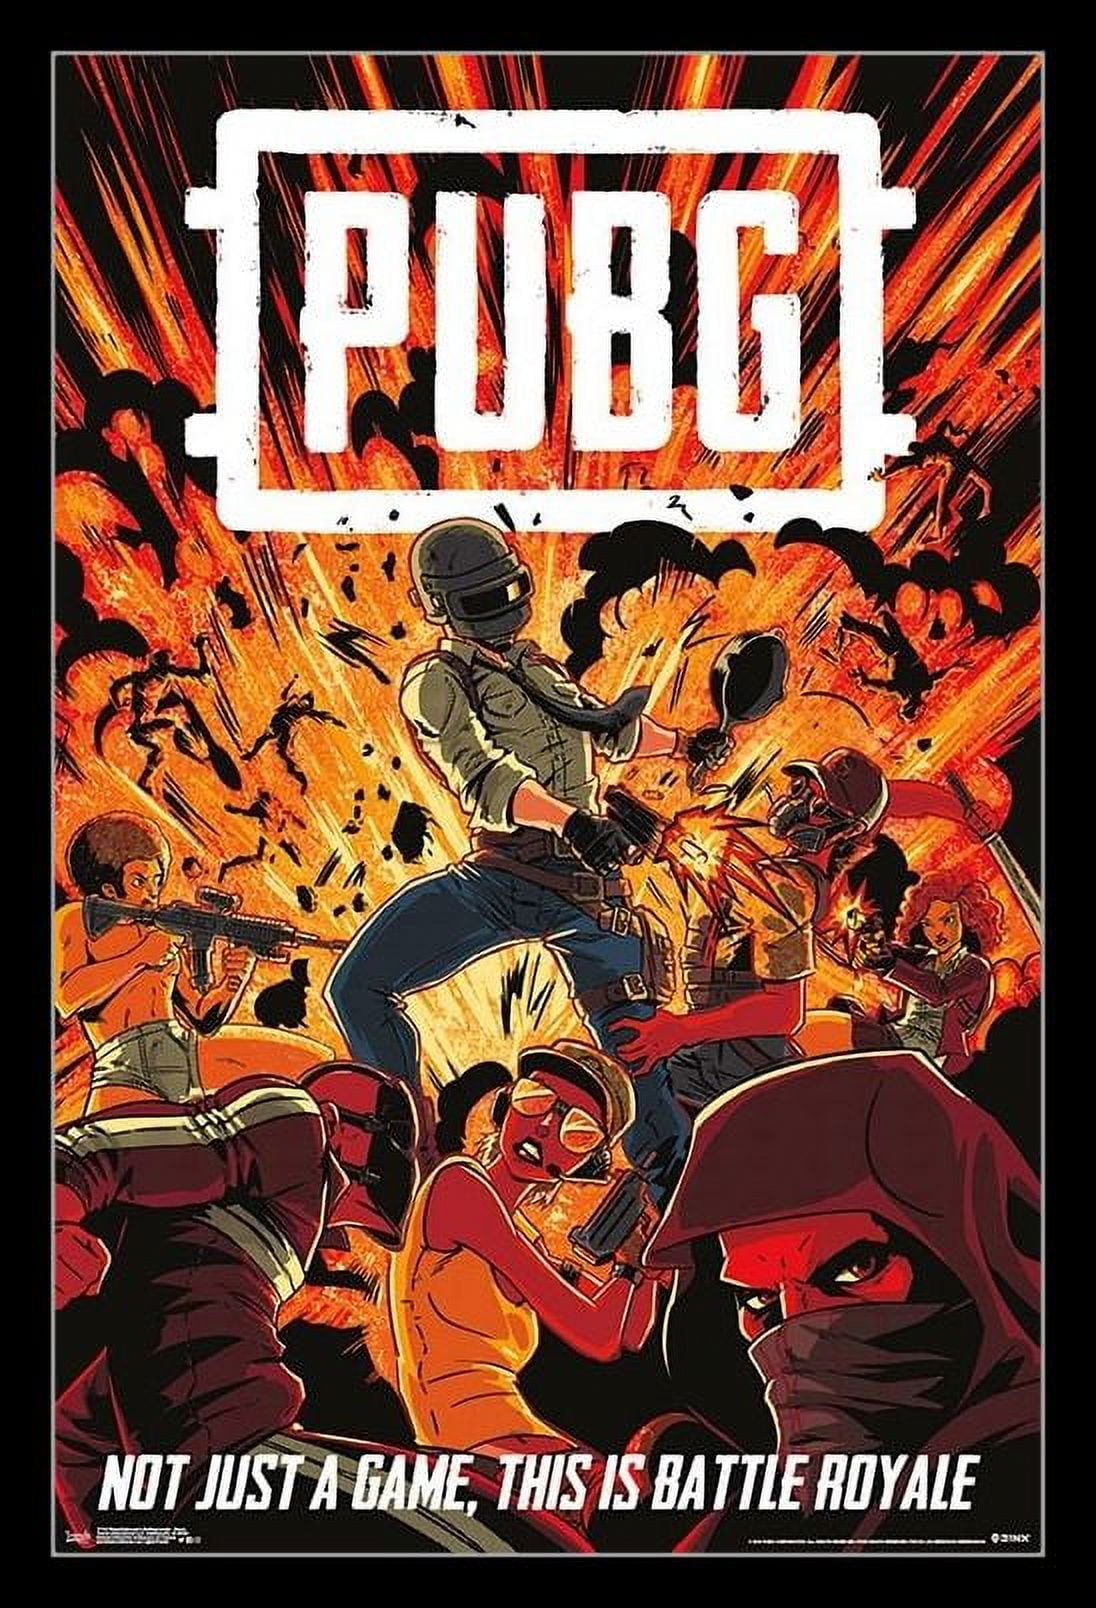 Pubg Game Poster Paper Print Fine Art Print - Gaming posters in